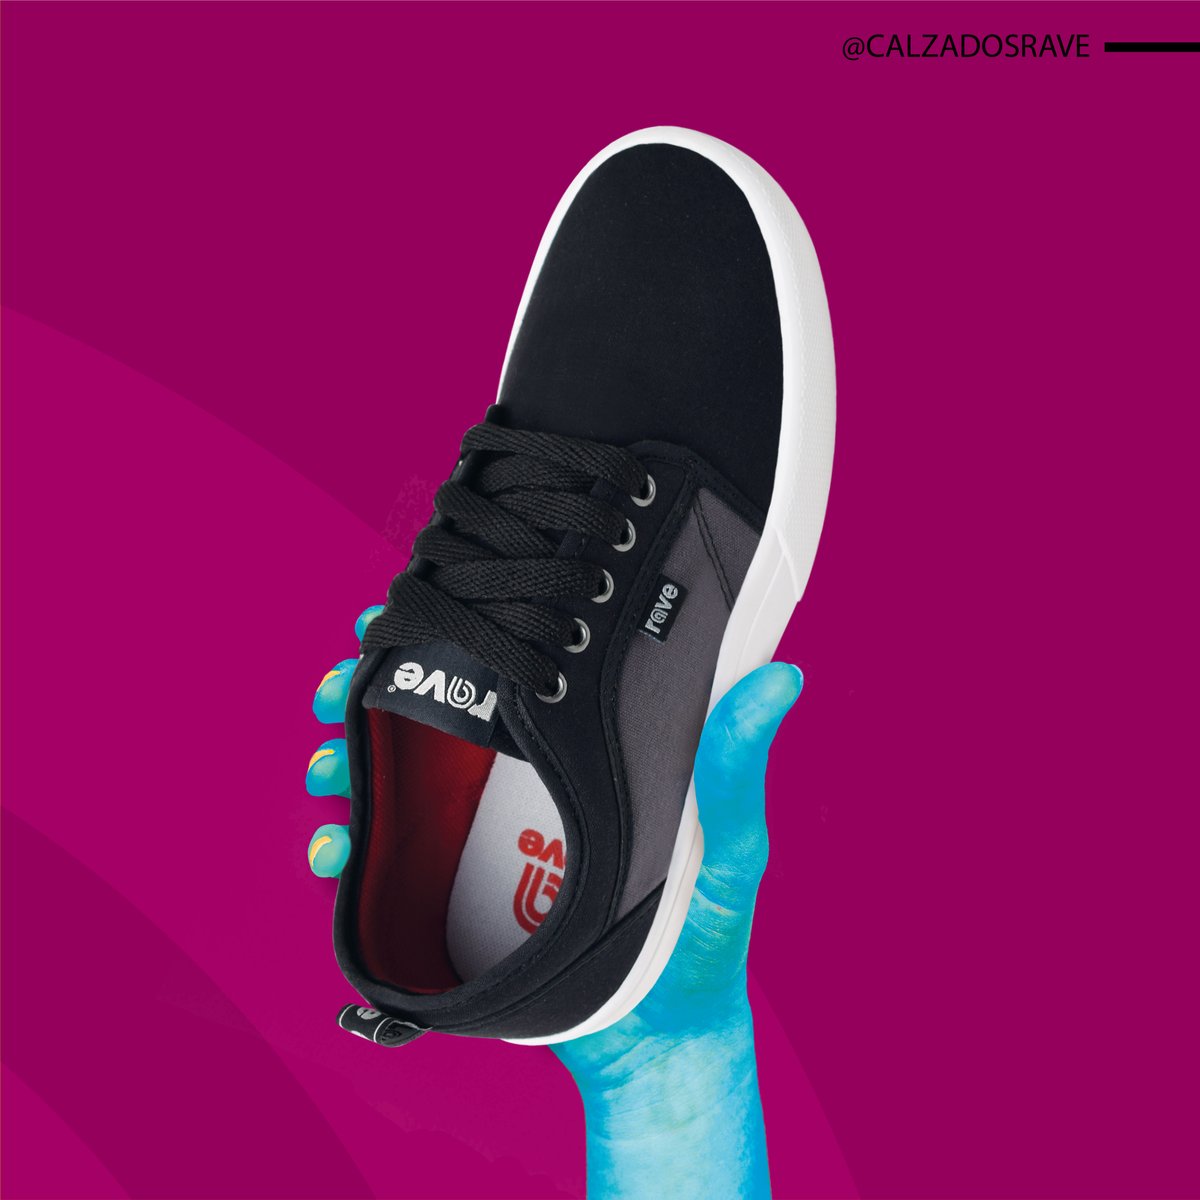 Calzados Rave on Twitter: "Cual es tu #Mood de hoy?! El nuestro es #Rave  https://t.co/zqQZRzCcFc . . #calzadosrave #zapatos #sneaker #teen #kids  #love #trend #instagood #fashion #zapatillas #contento  https://t.co/IYpuAkDvRr" / Twitter